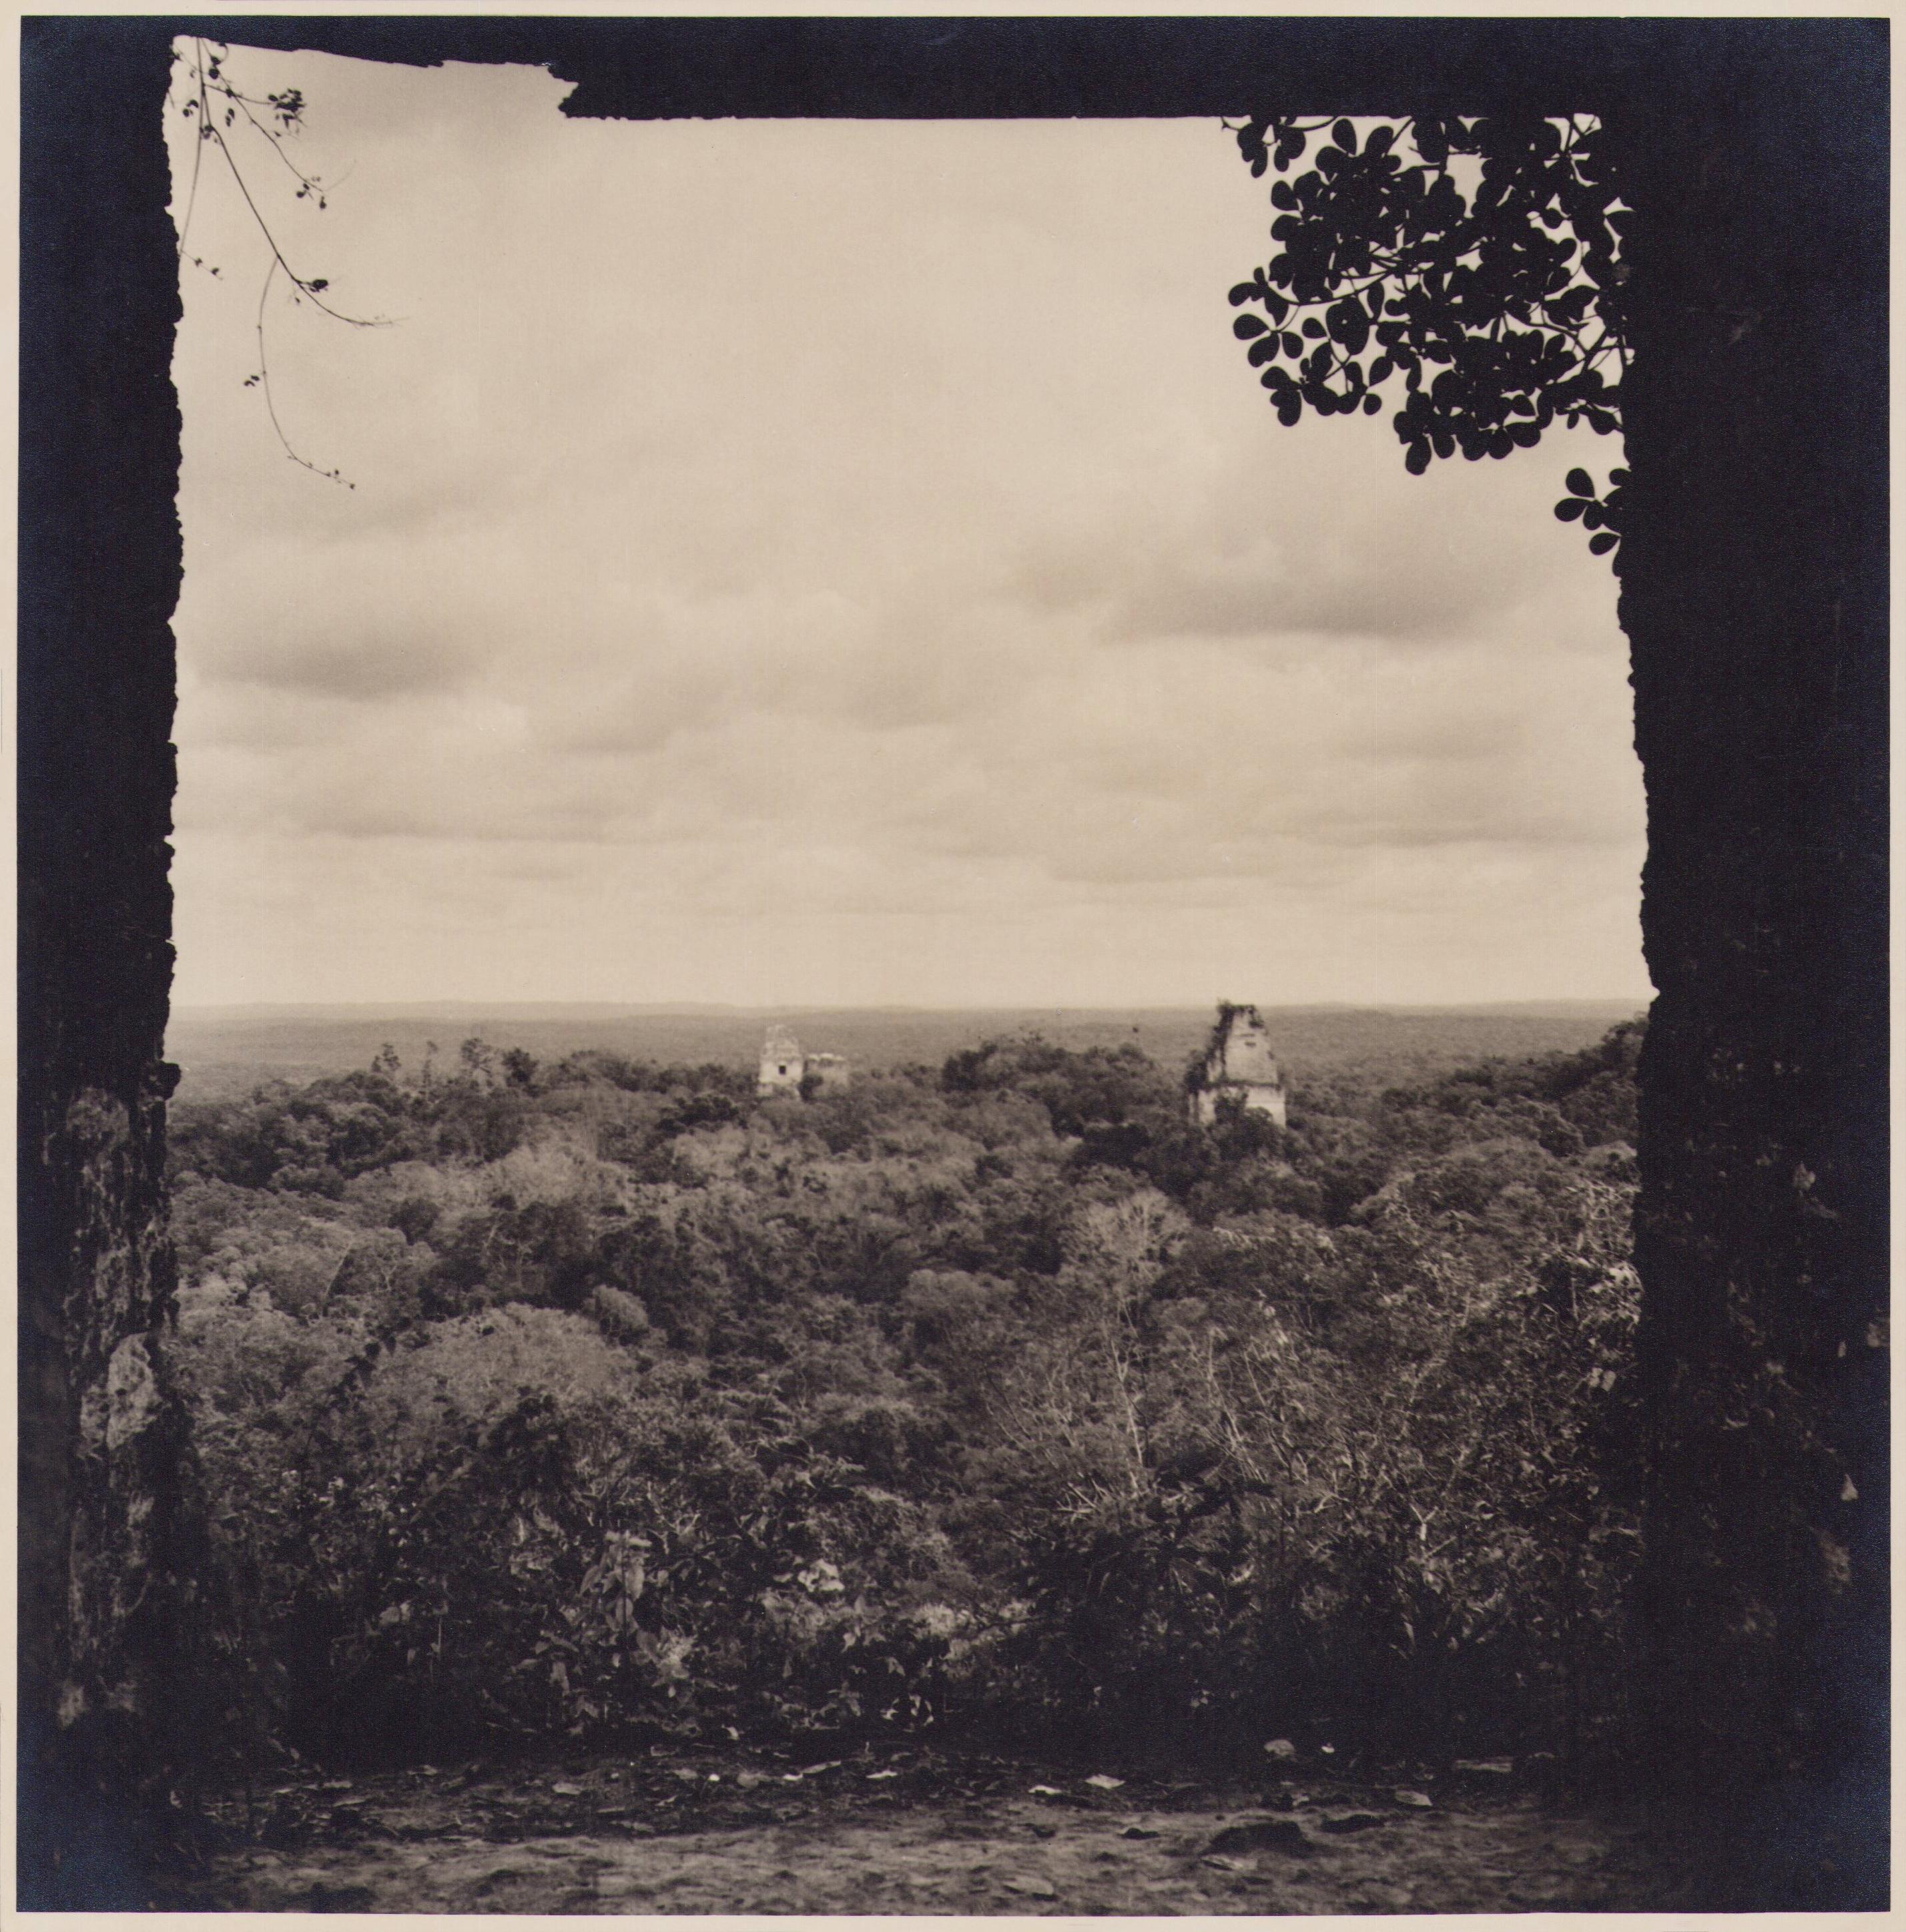 Hanna Seidel Portrait Photograph - Guatemala, Landscape, Black and White Photography, ca. 1960s, 24, 4 x 24 cm